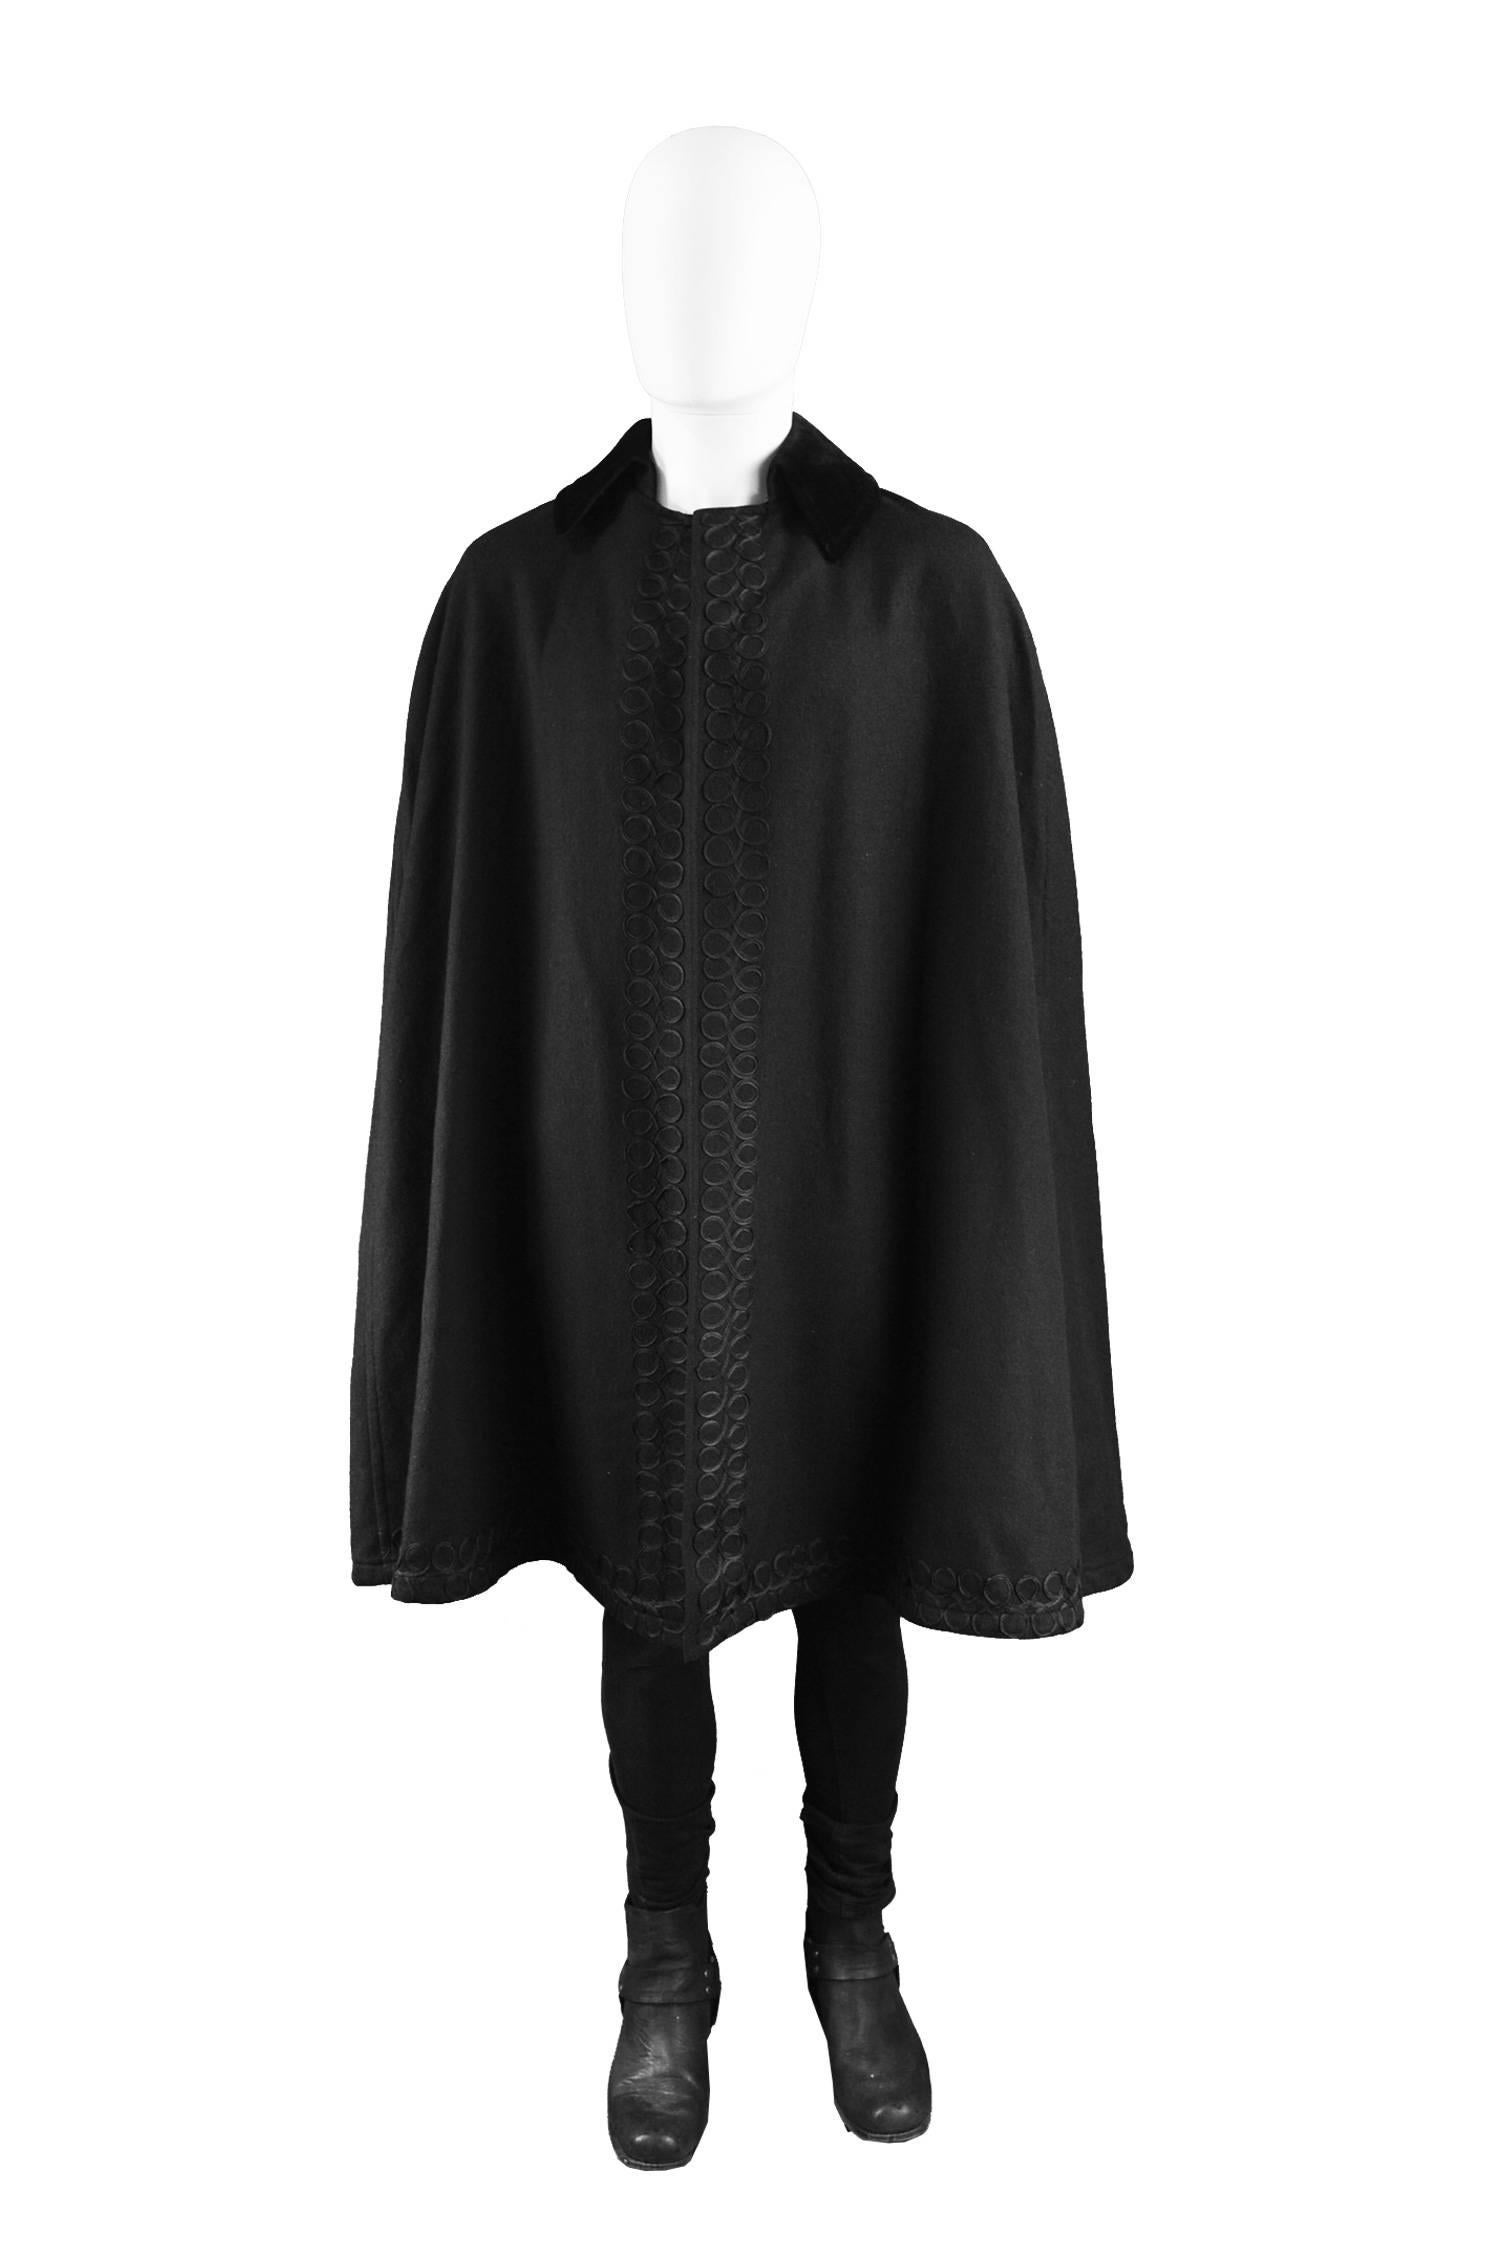 Vintage Men's Black Wool Cape with Velvet Collar by Scott Lester, 1960s

Size: One size fits most. 
Chest - Free
Waist - Free
Length (Shoulder to Hem) - 37” / 94cm
Shoulder to Shoulder - 23” / 58cm

Condition: Excellent Vintage Condition - No